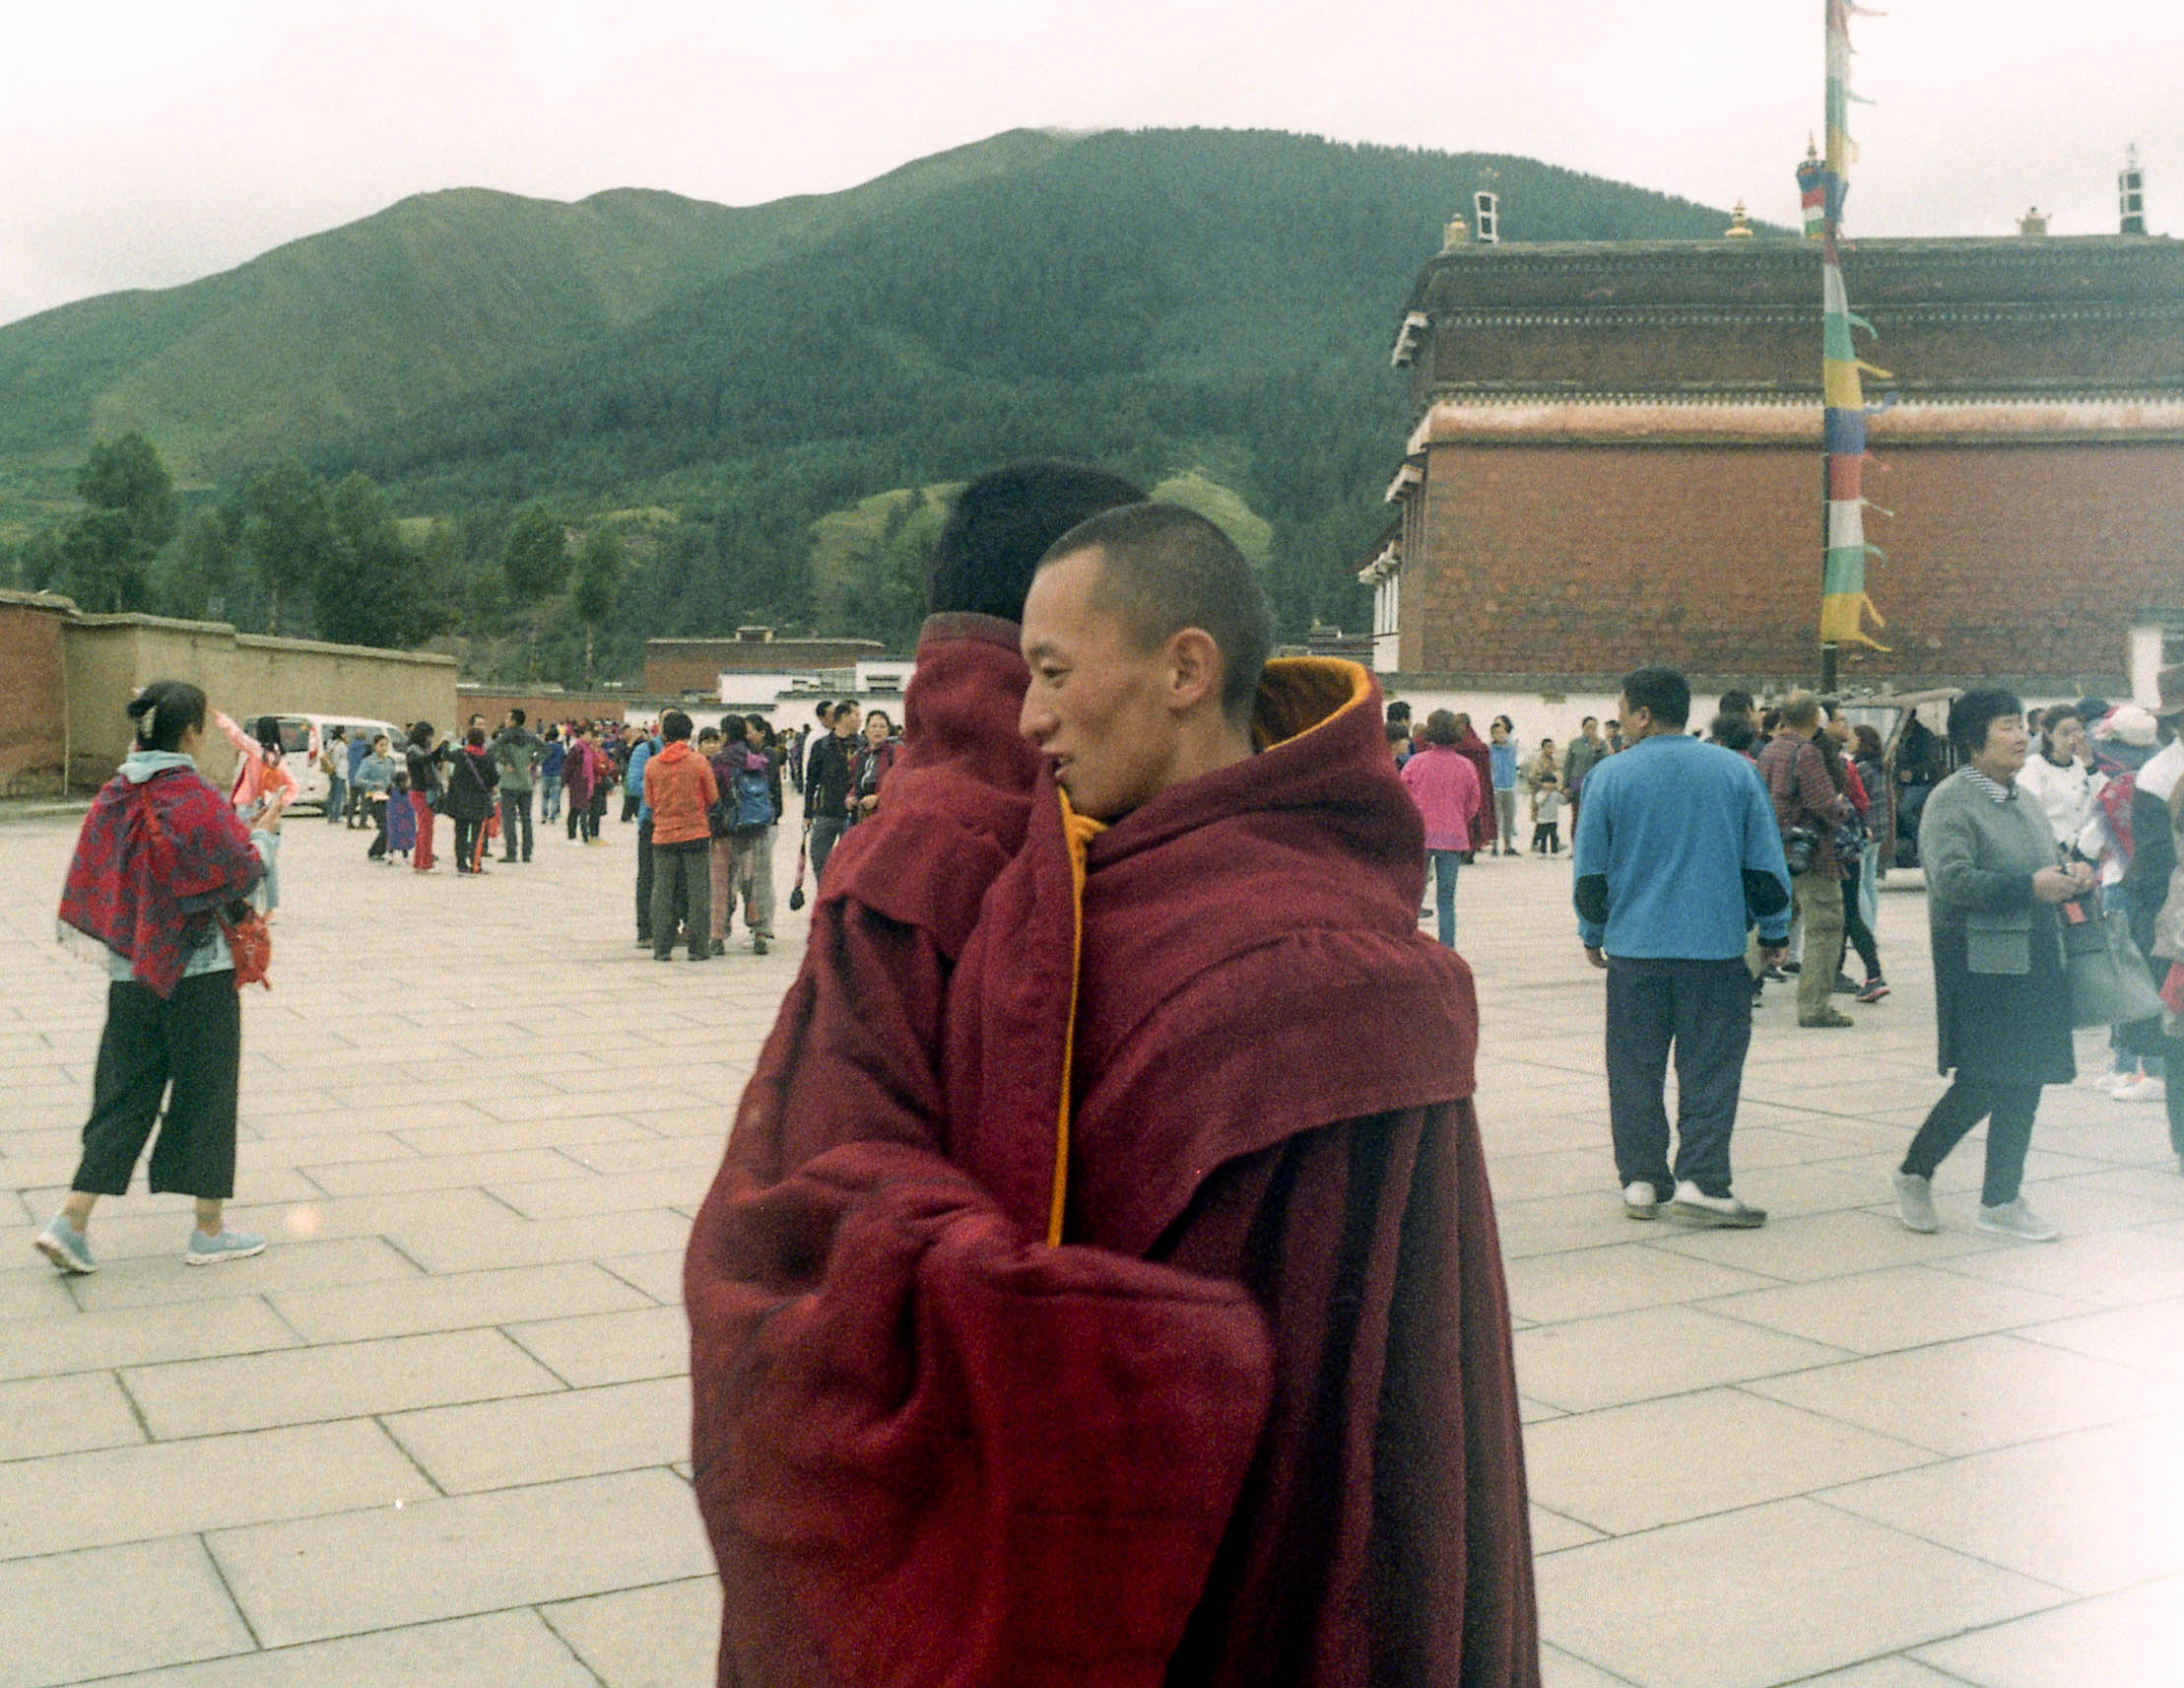 Monk break in China